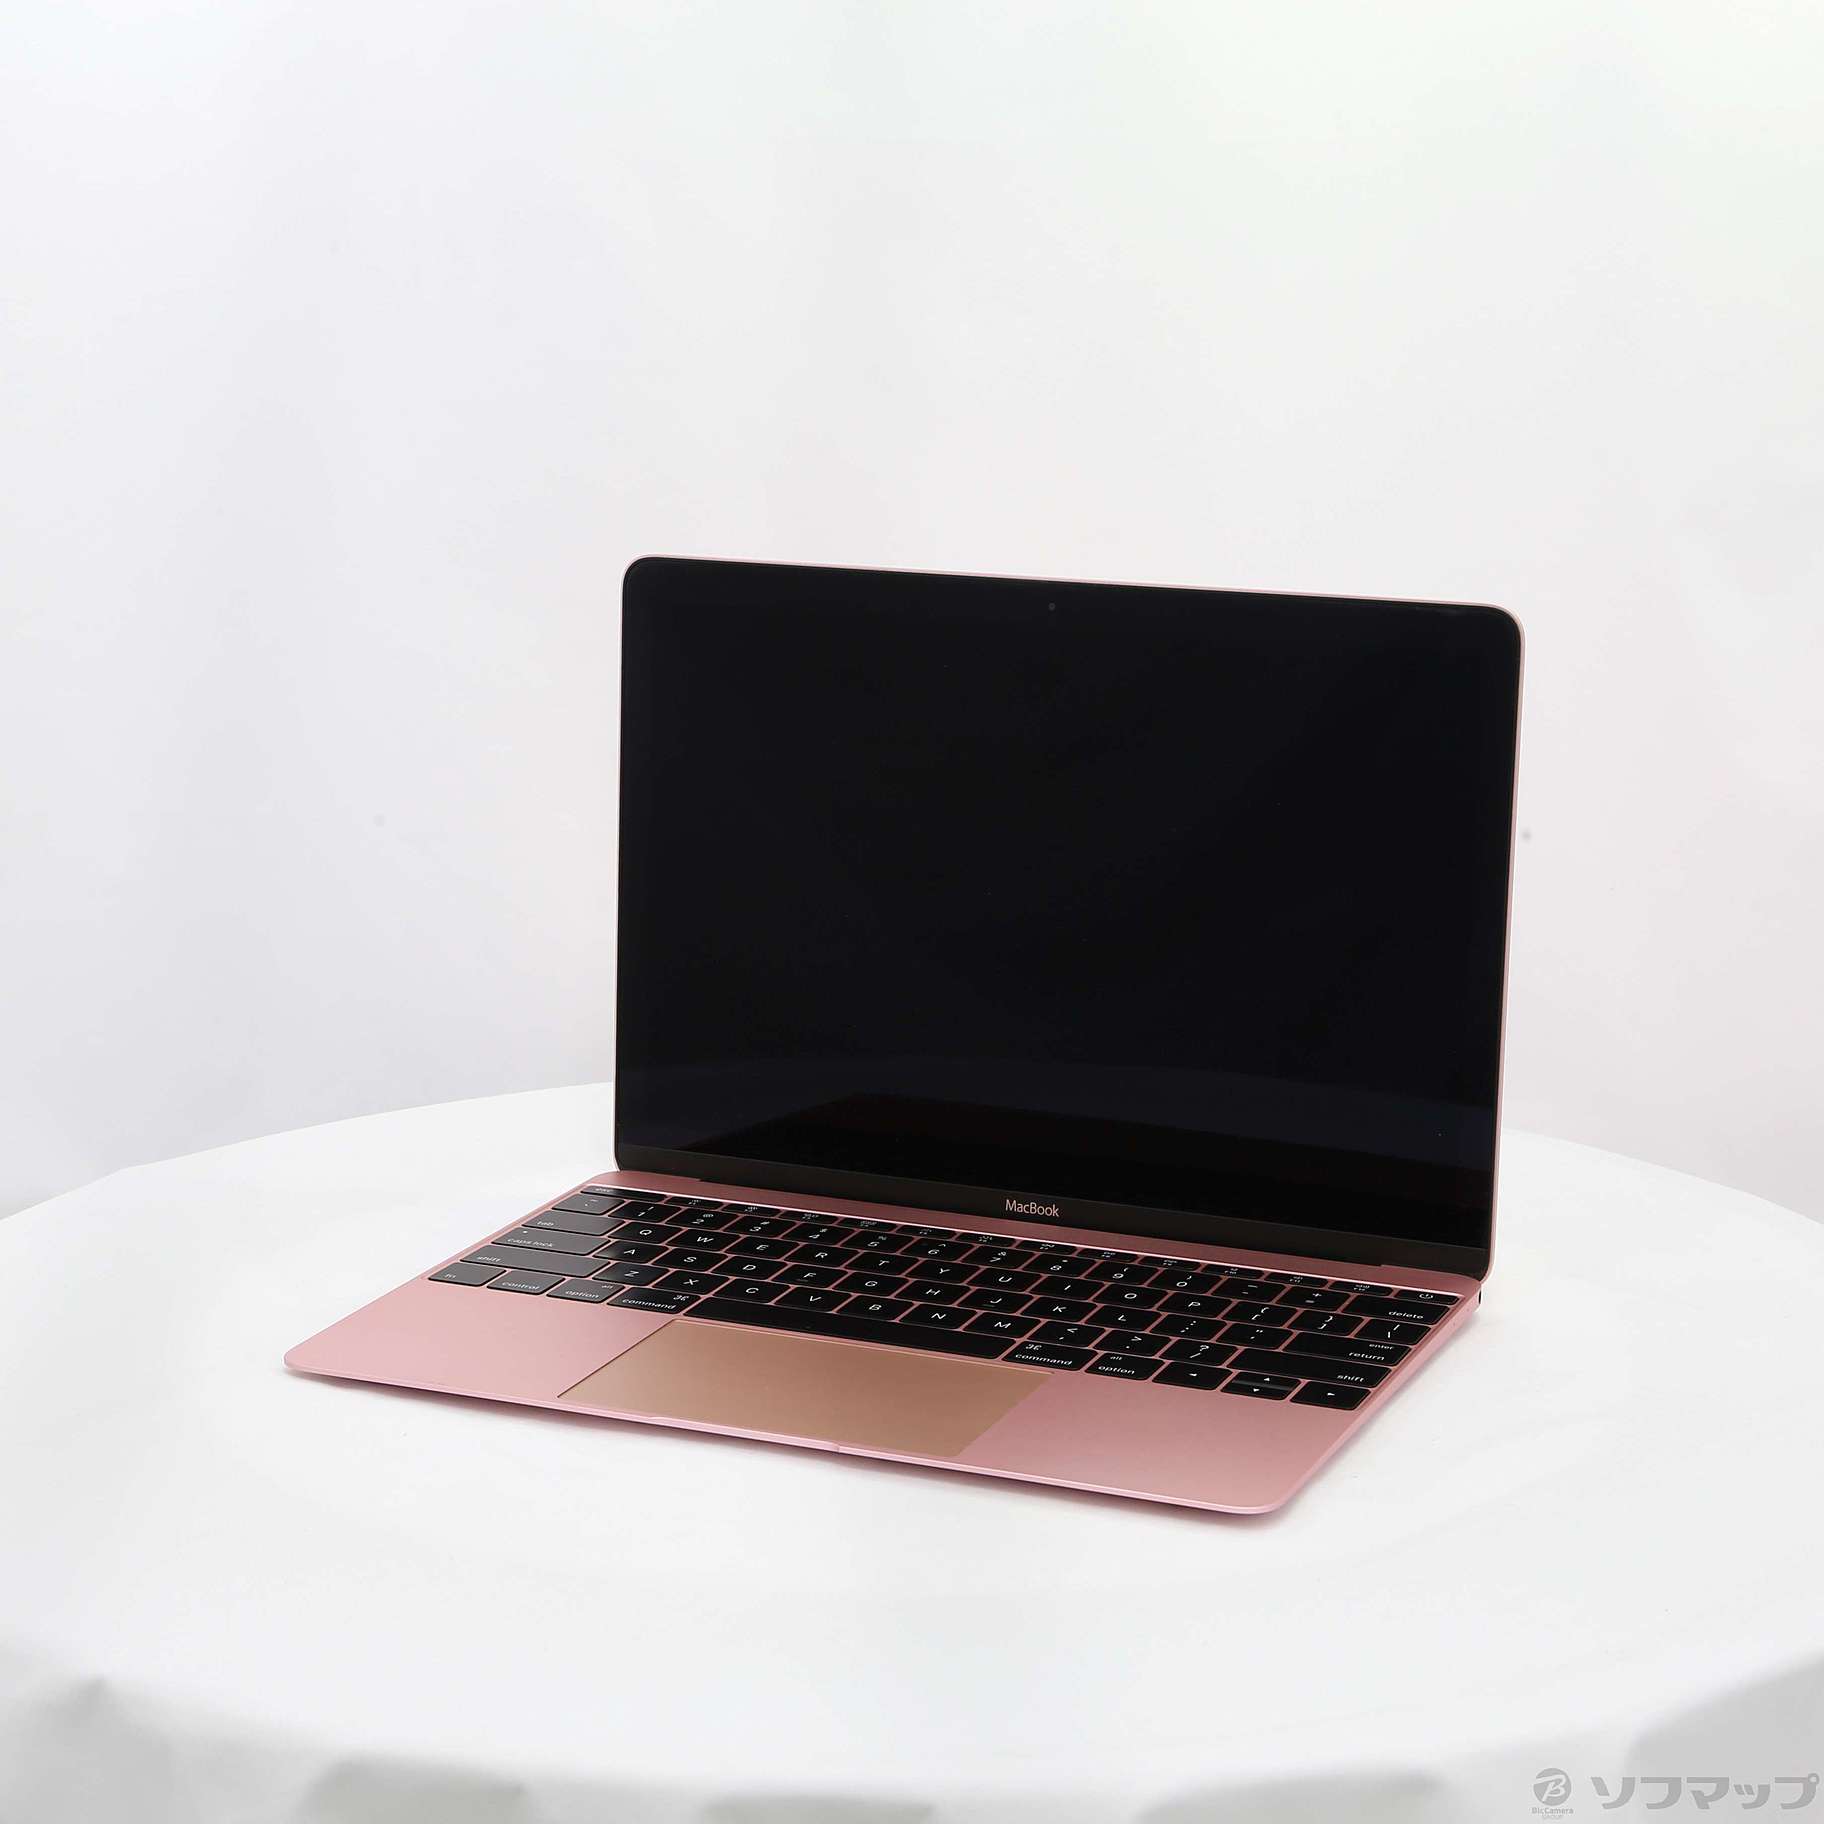 APPLE MacBook MACBOOK MMGL2J/A 2016 - rehda.com